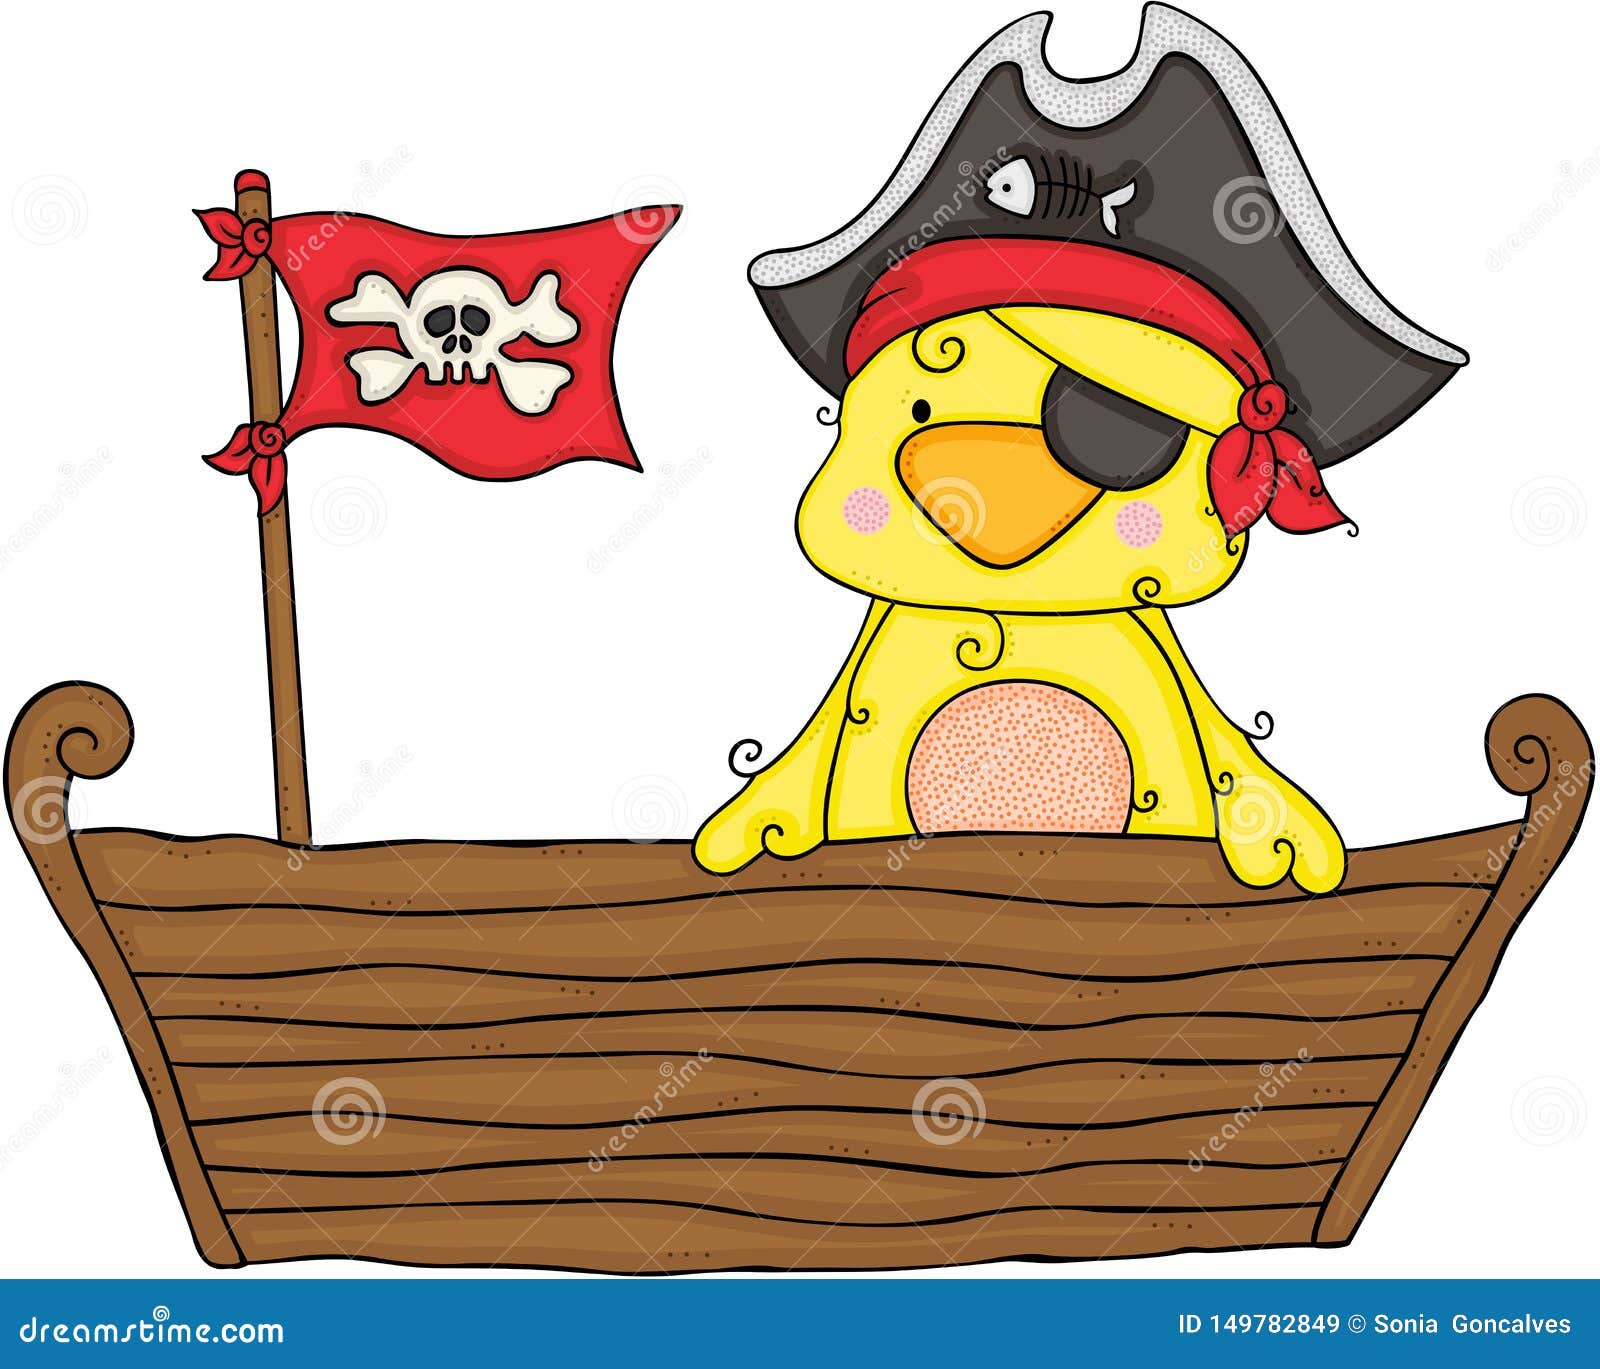 cute yellow bird pirata on wooden boat